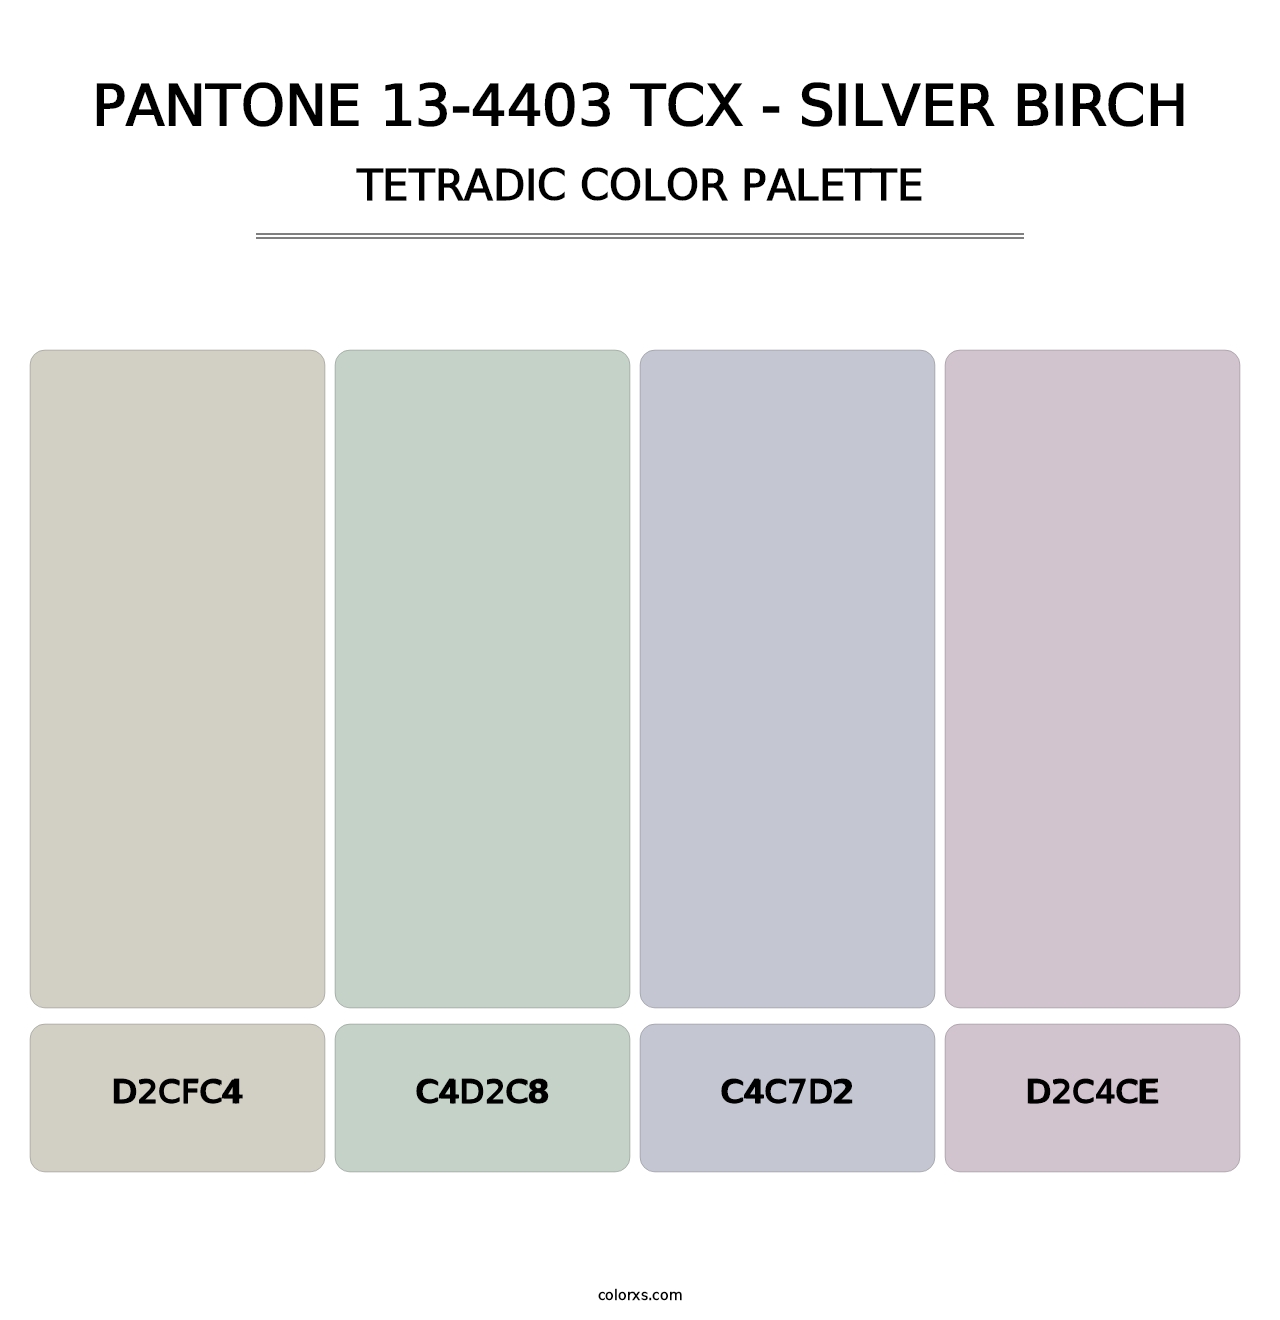 PANTONE 13-4403 TCX - Silver Birch - Tetradic Color Palette